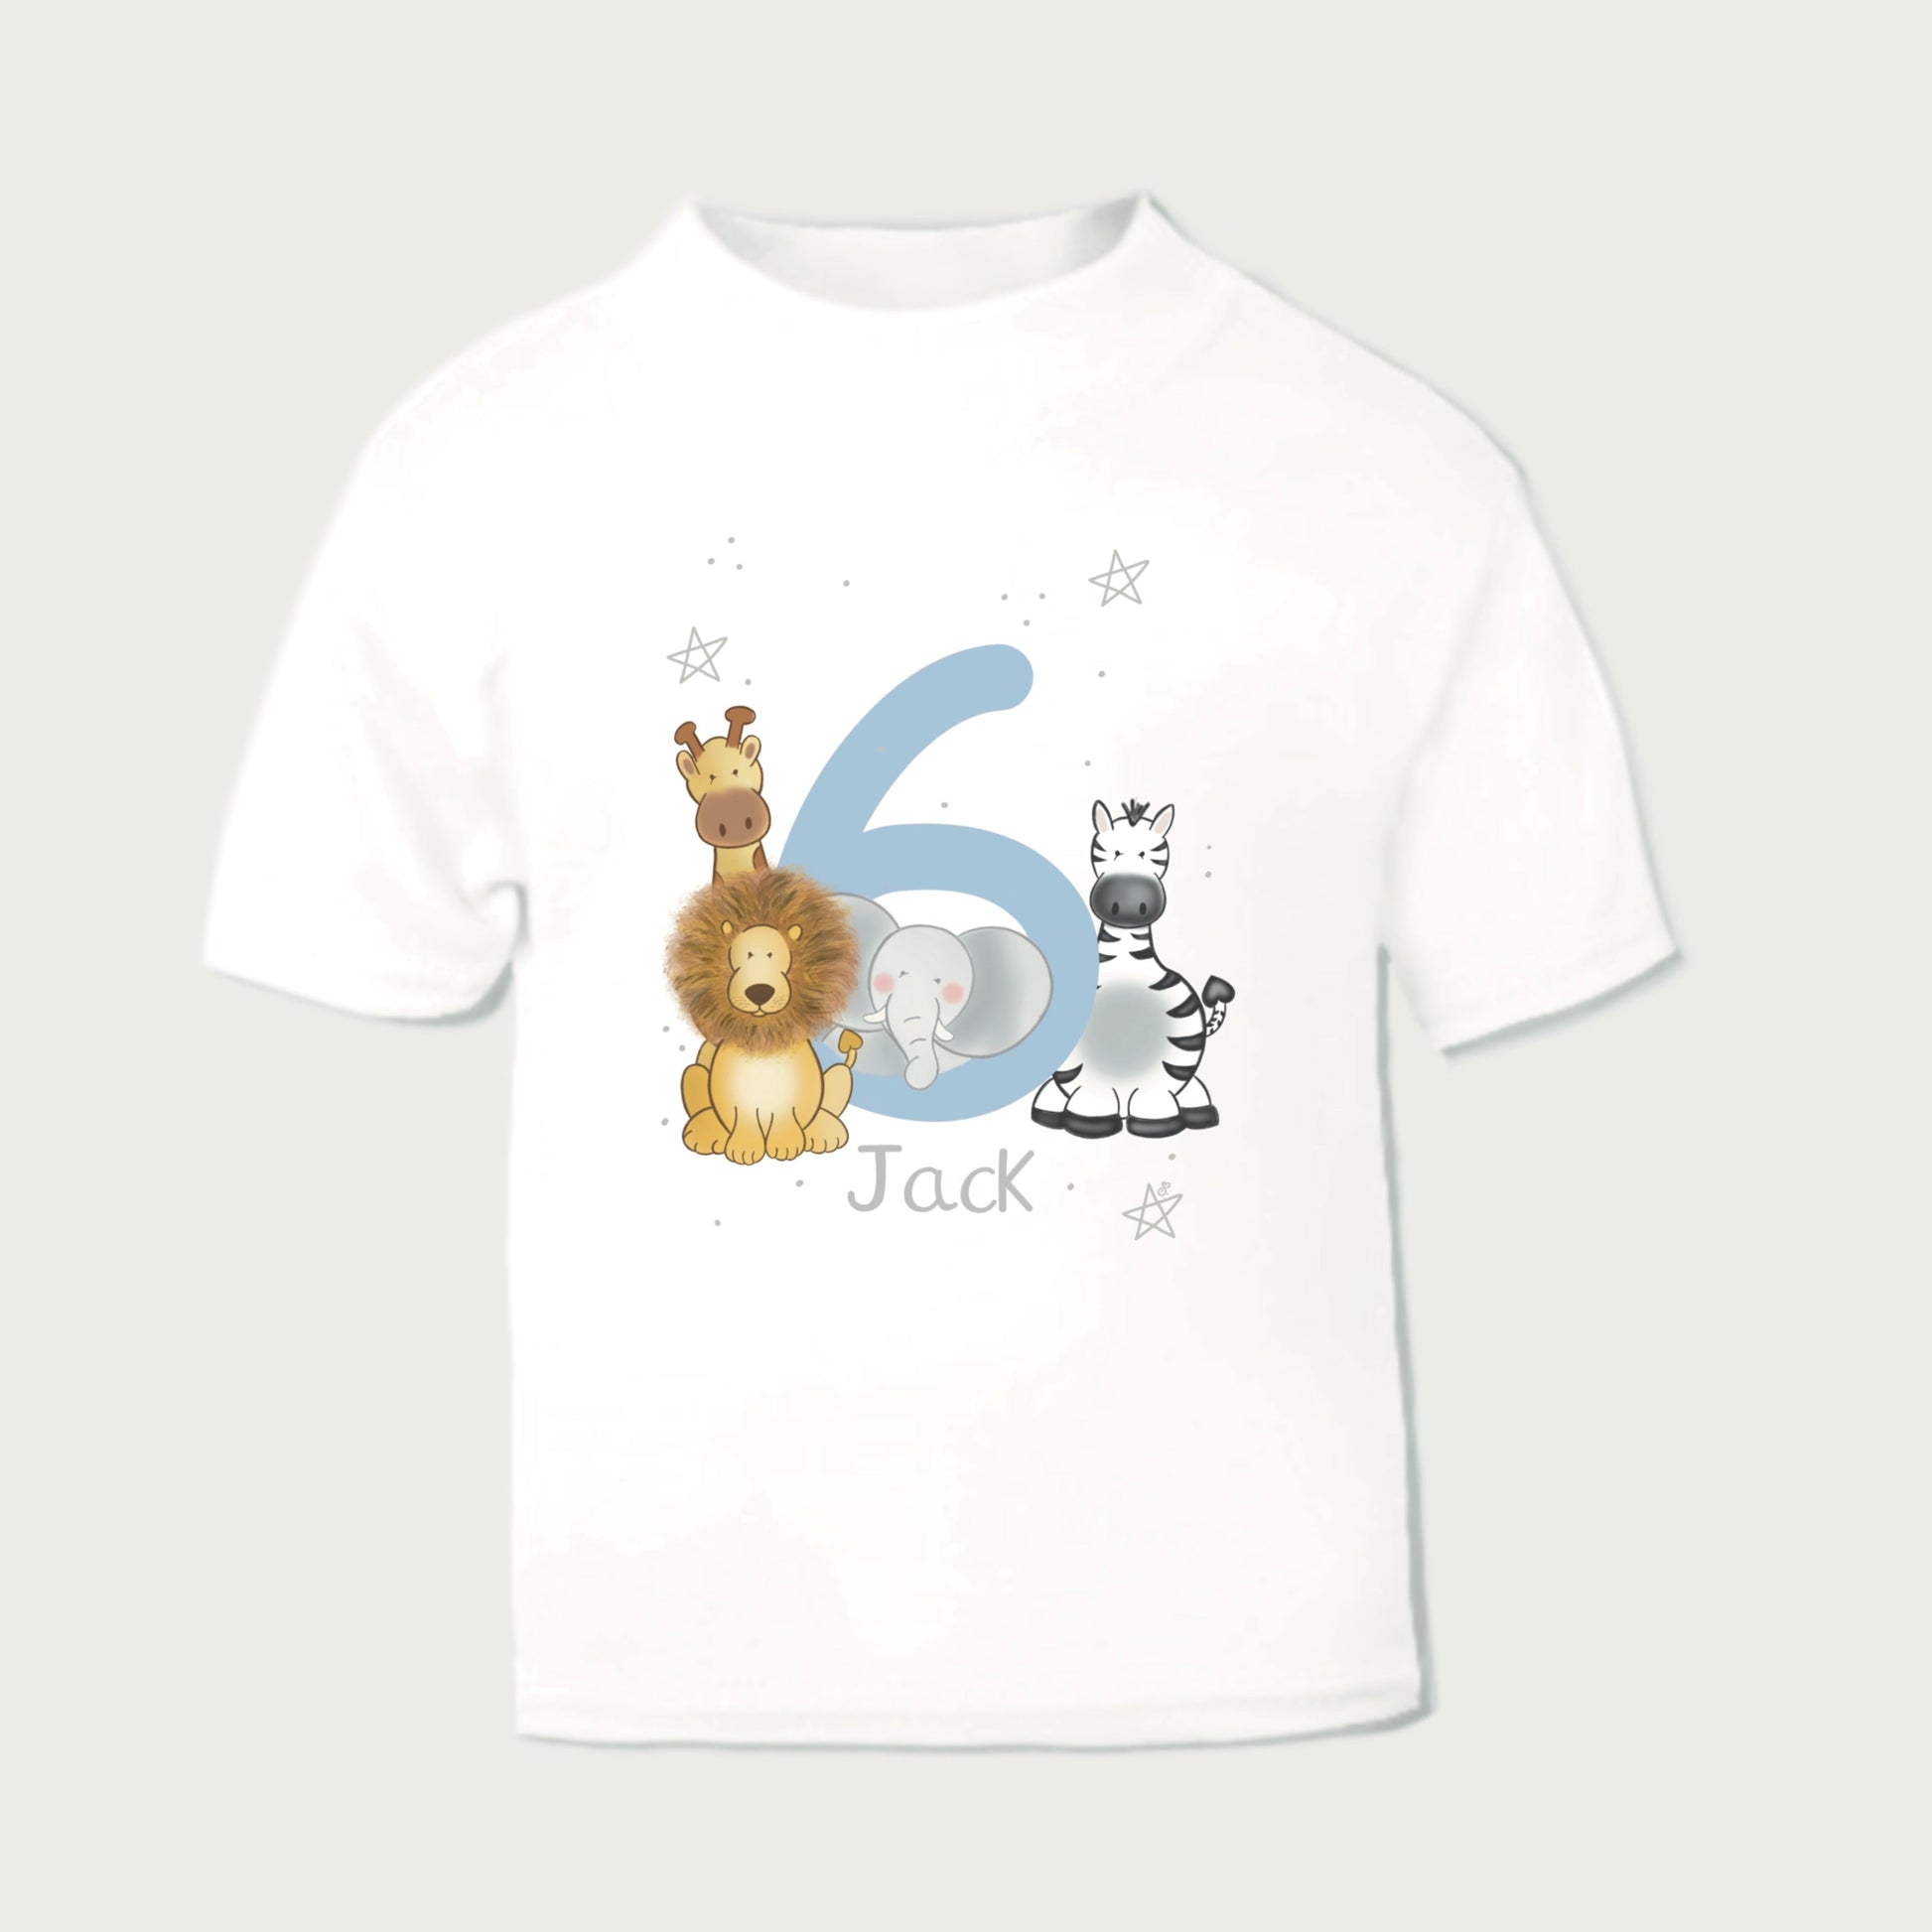 6th birthday keepsake t-shirt with safari animal design and boys name and blue number 6